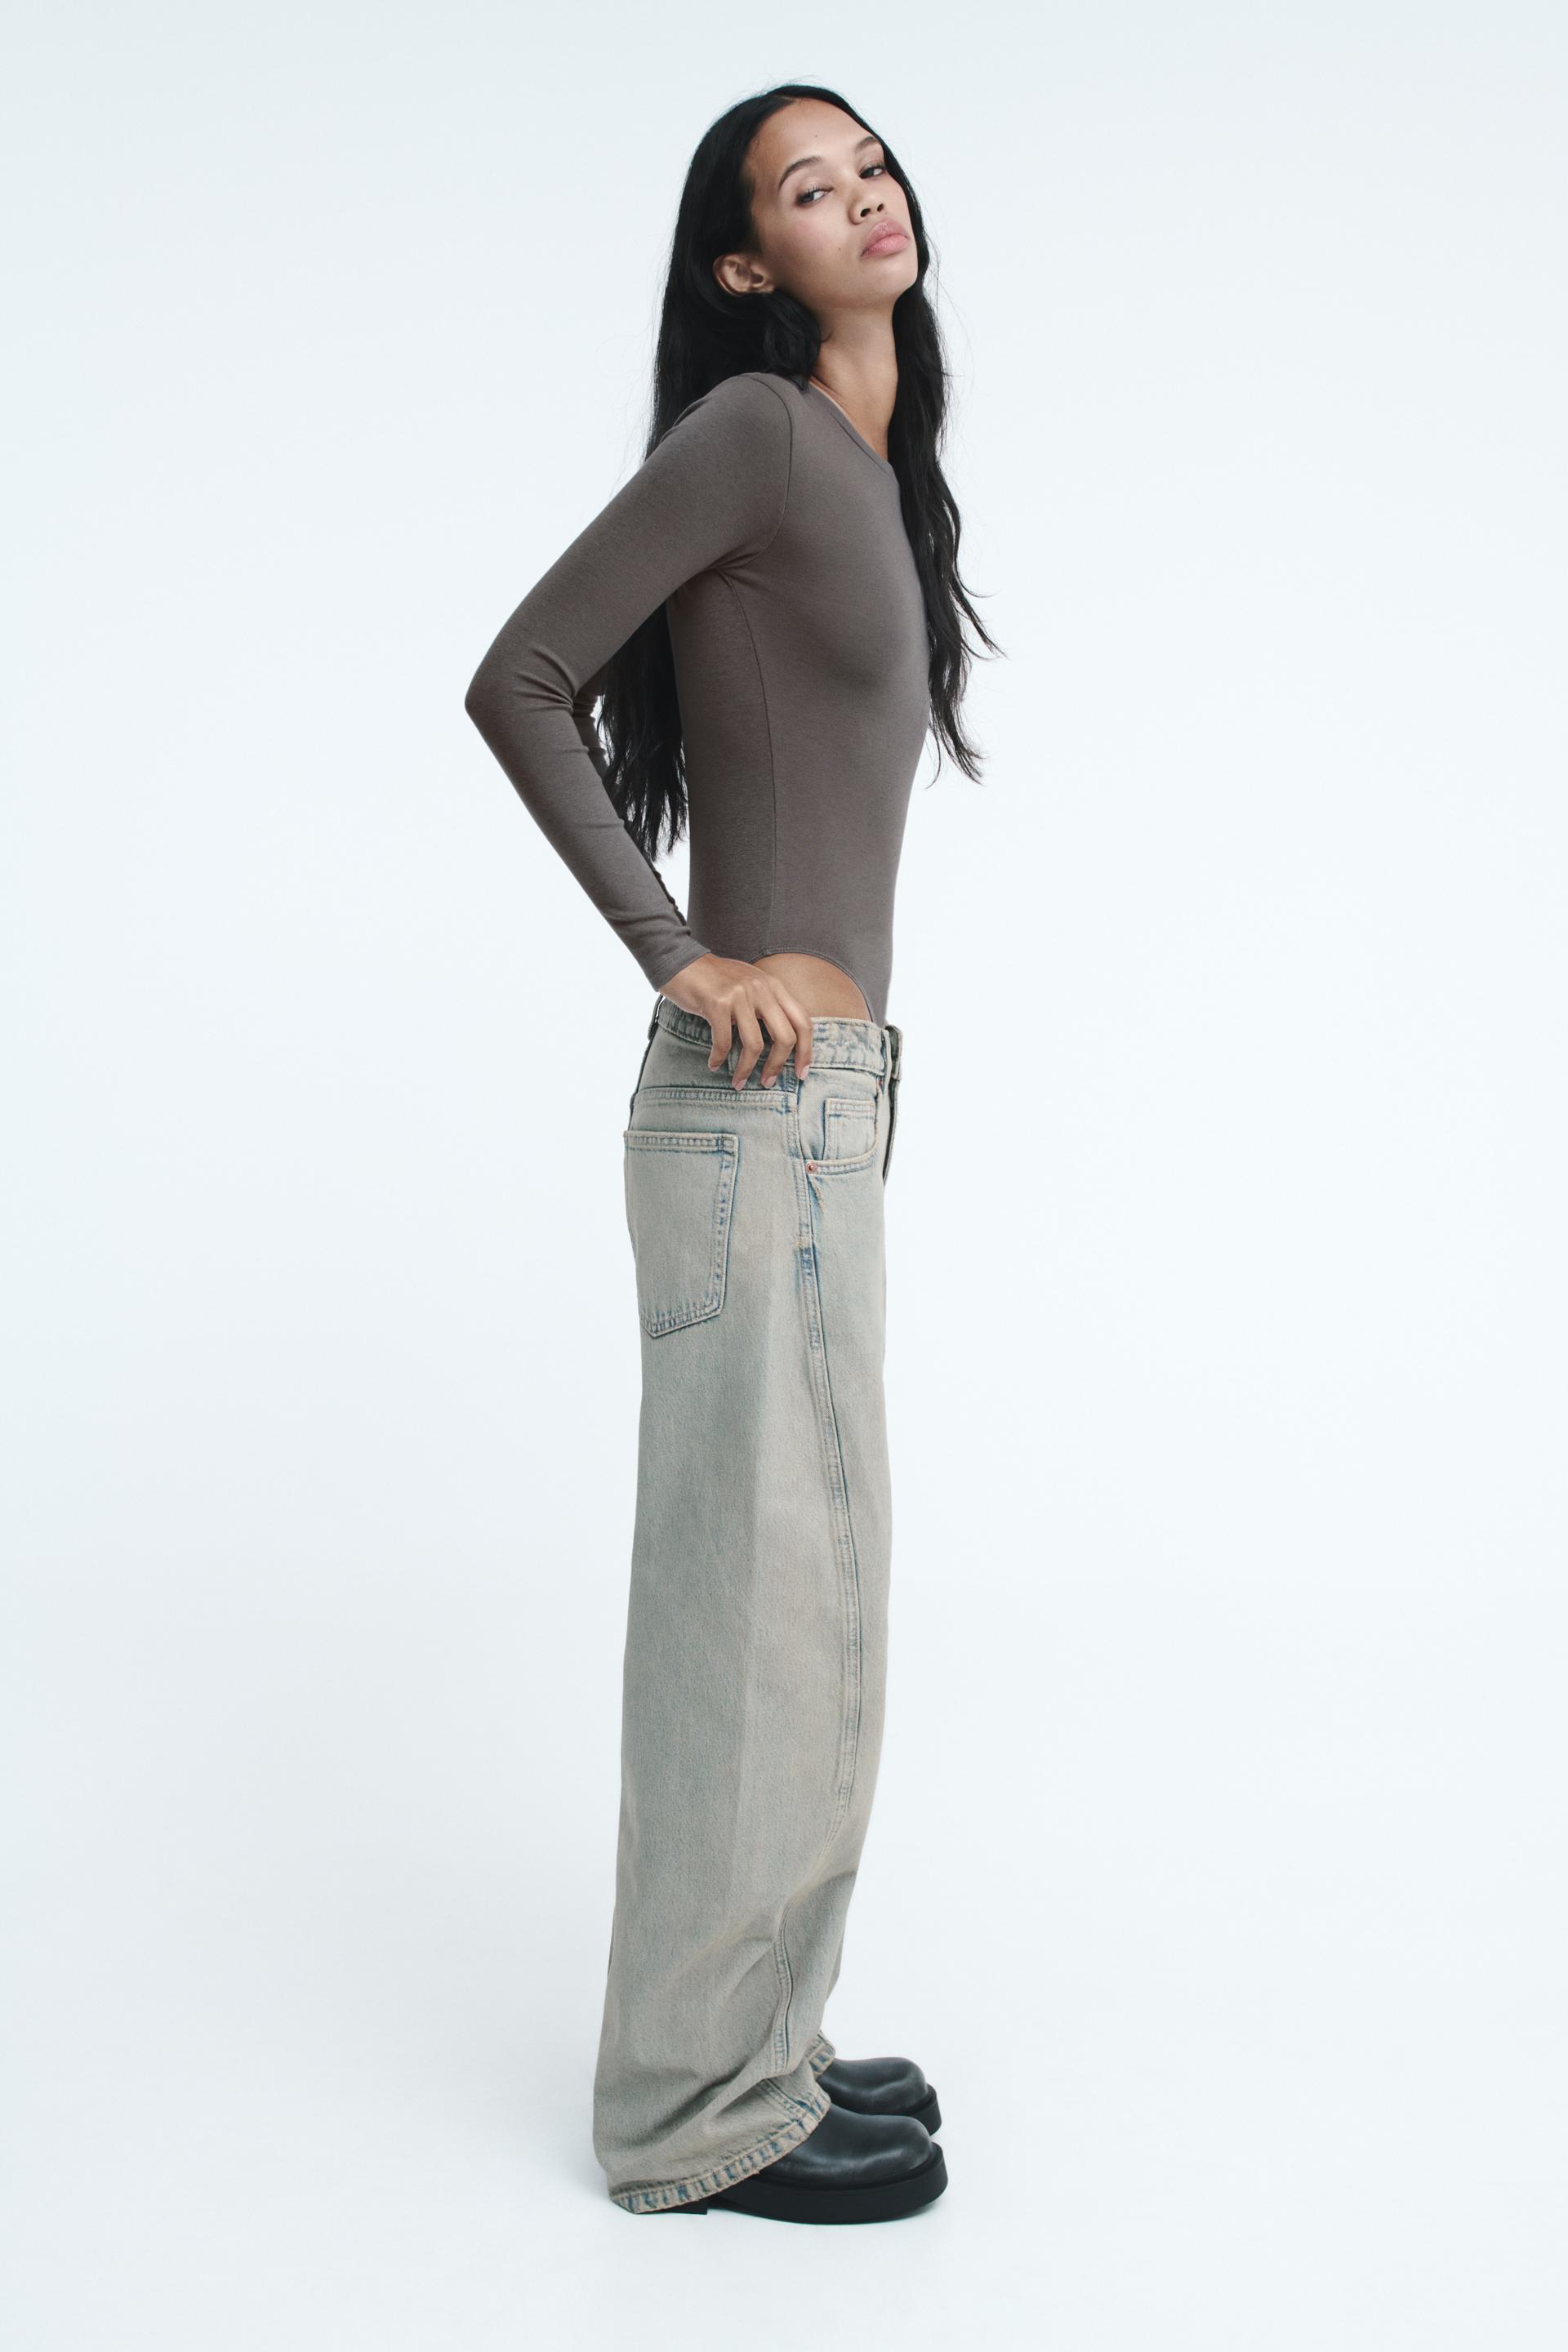 ZARA Accessories Floral Print Wide Sleeve Velvet Bodysuit Blogger Favorite  sz M Size M - $41 - From Morgan